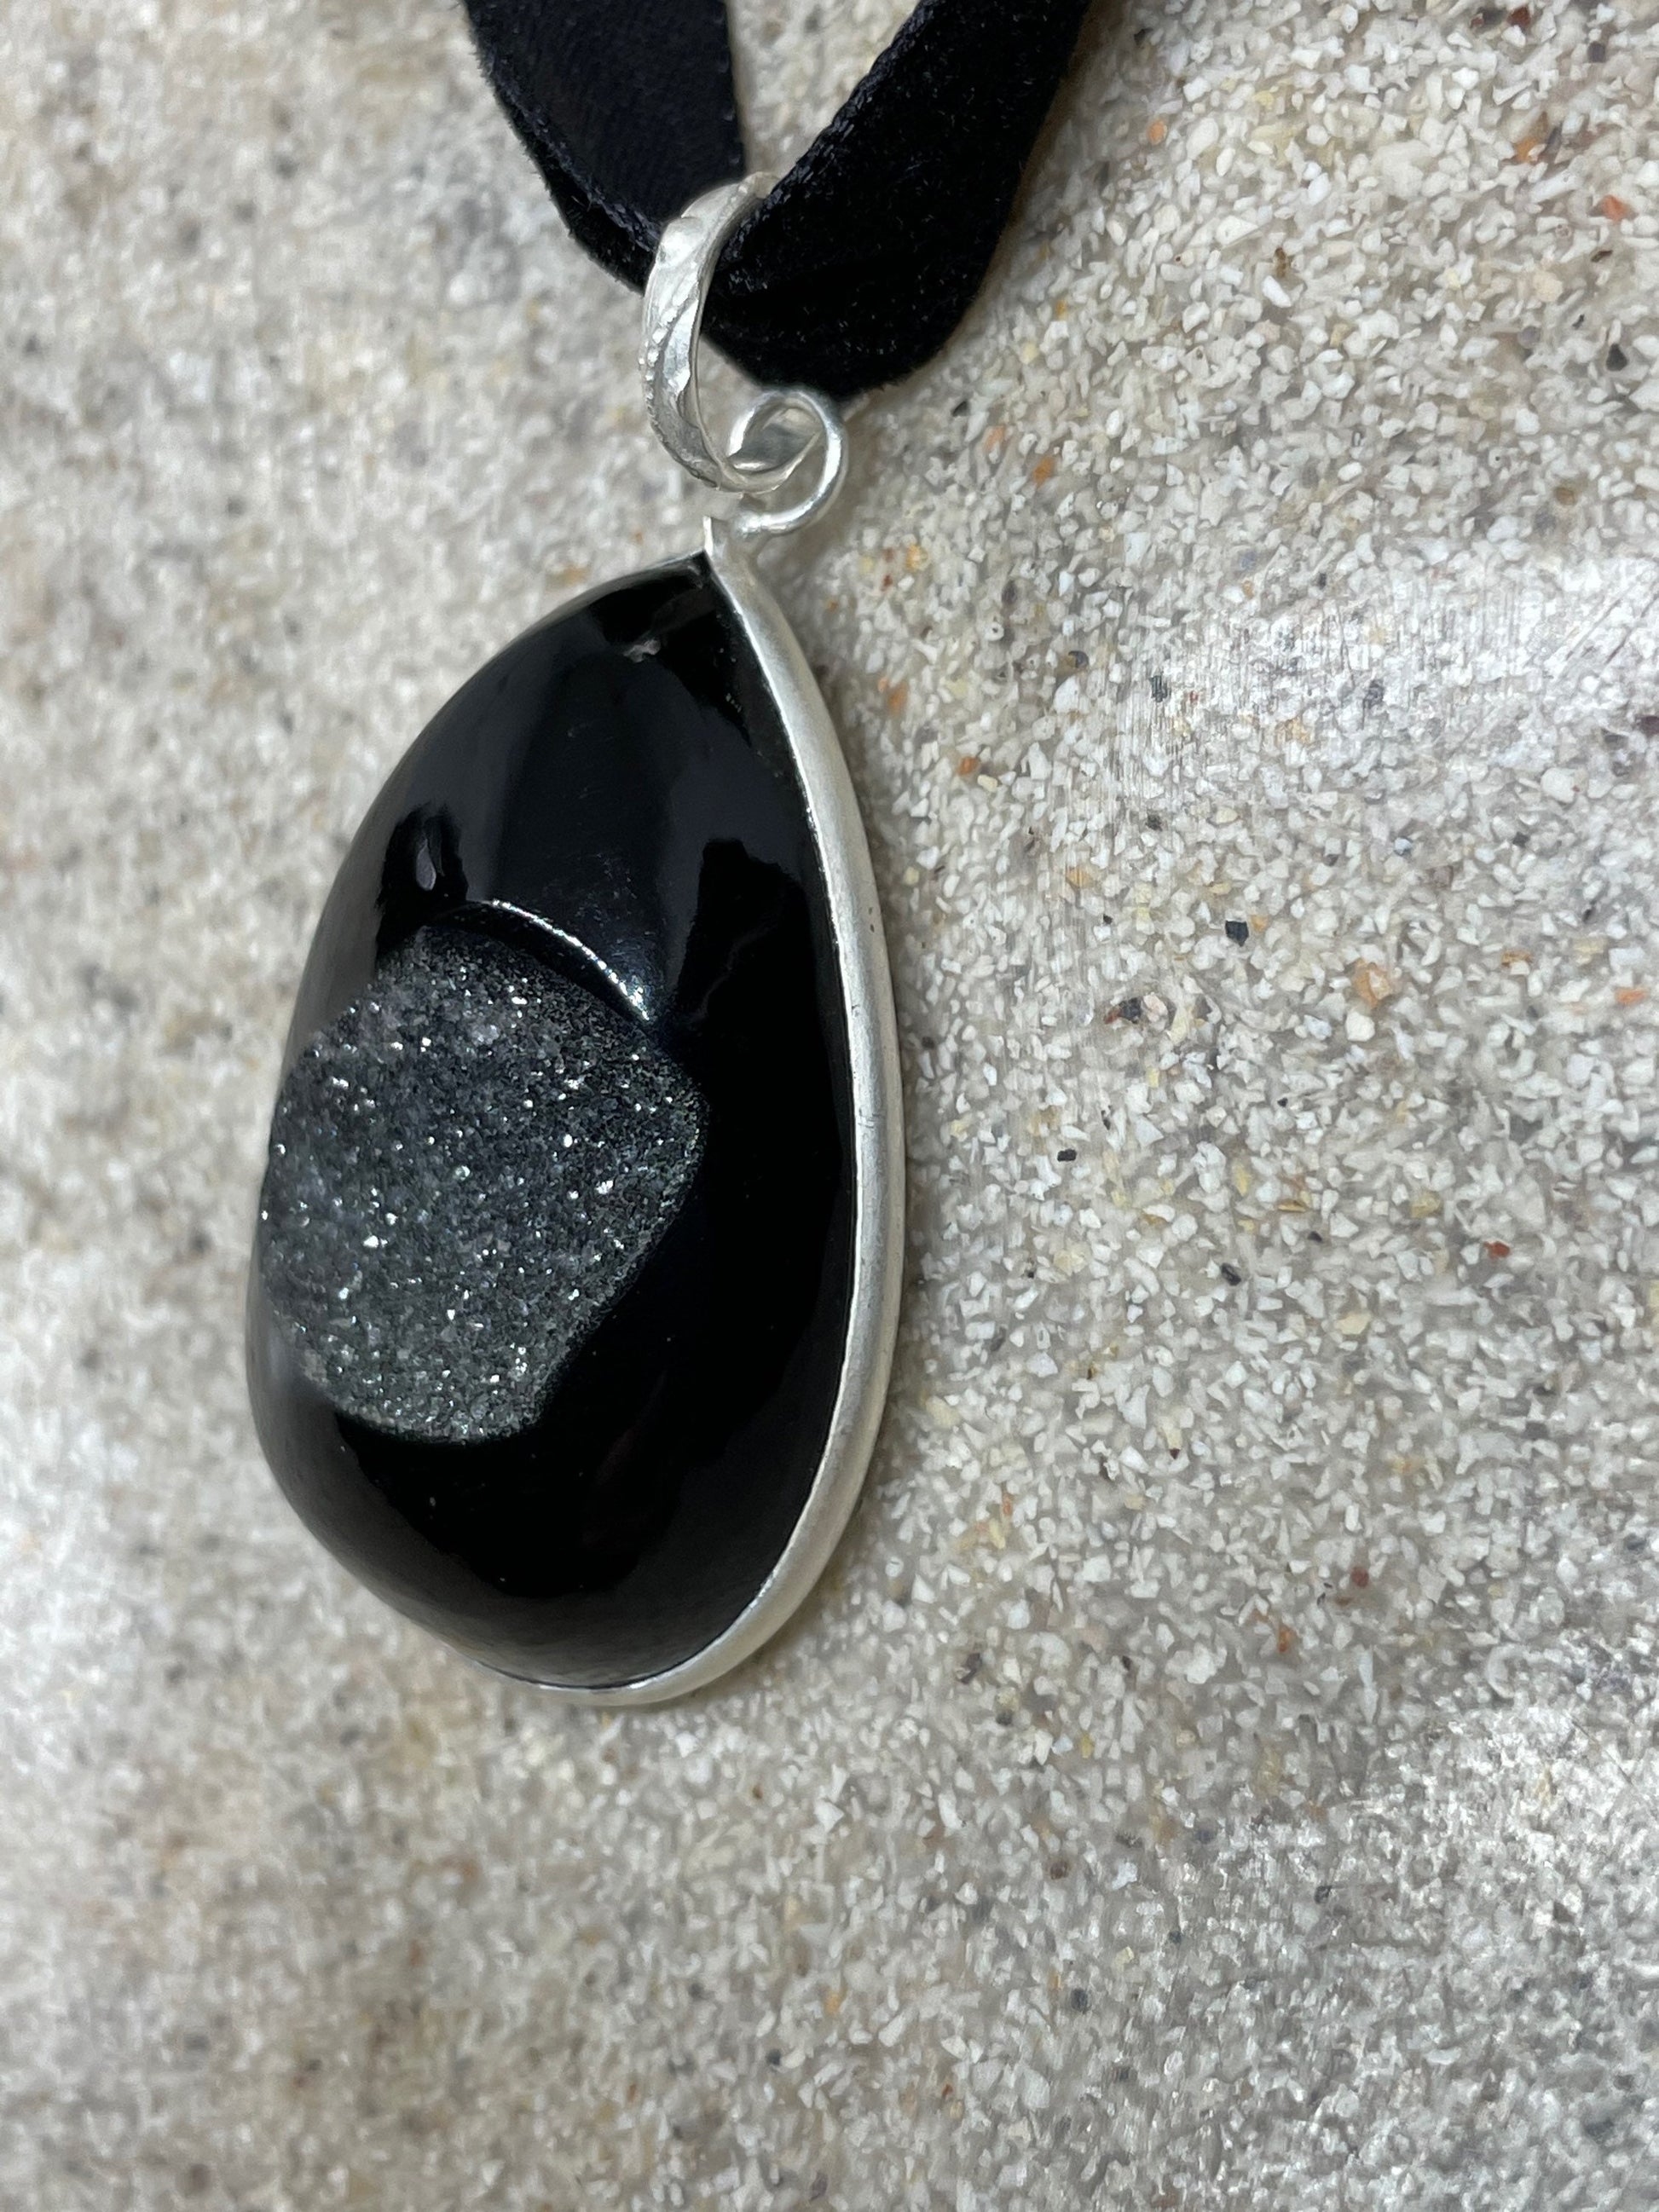 Vintage Silver Genuine Black Onyx druzy Dangle Pendant Necklace